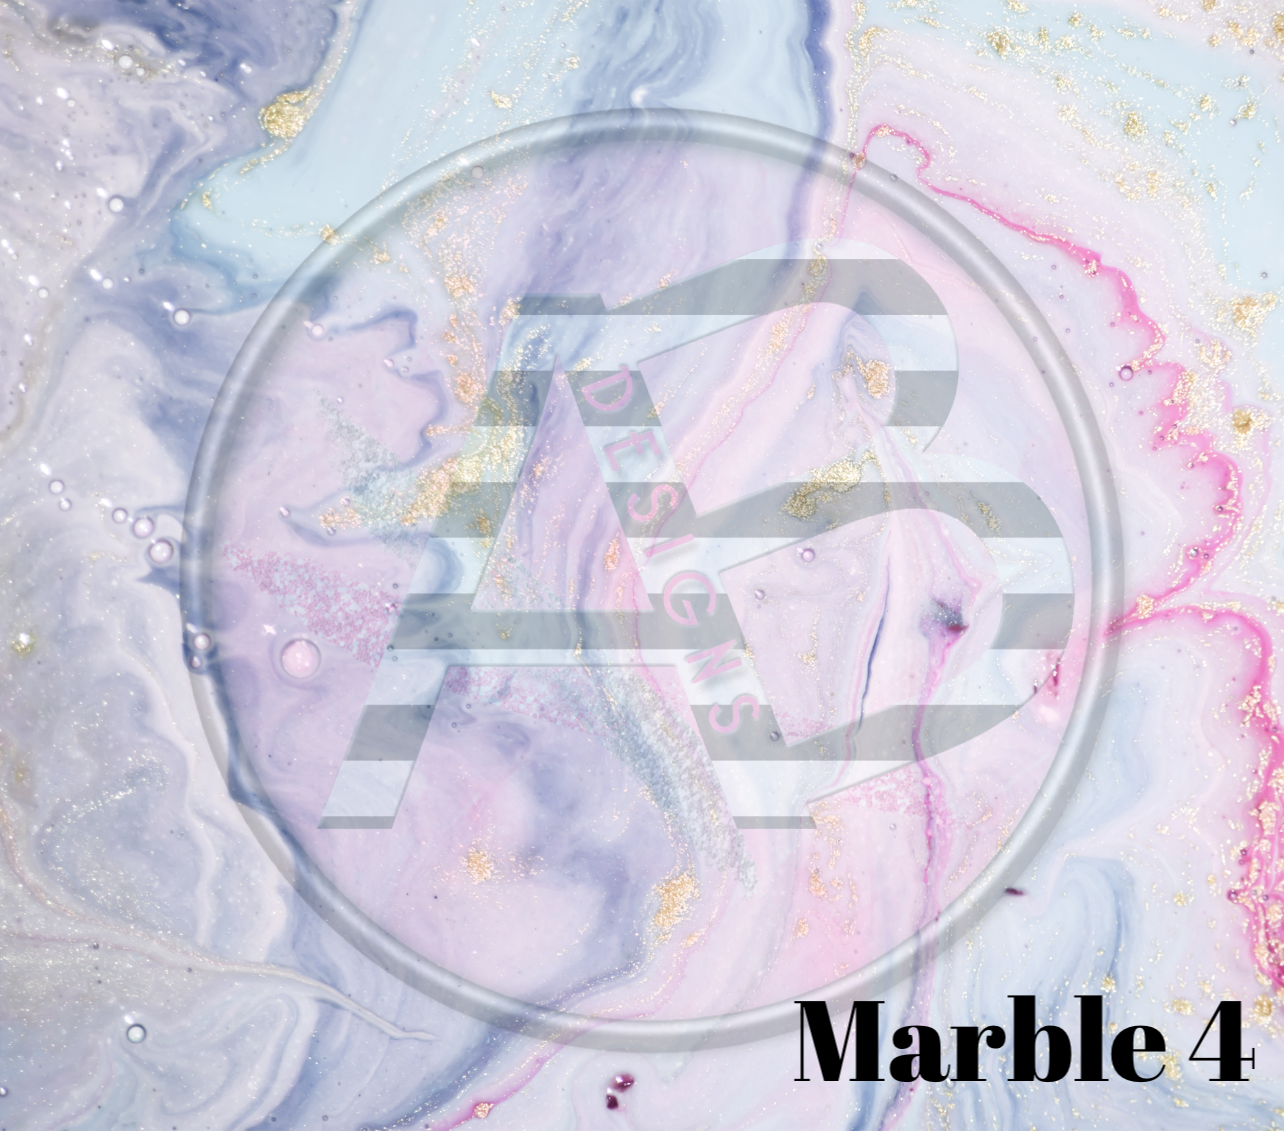 Adhesive Patterned Vinyl - Marble 4